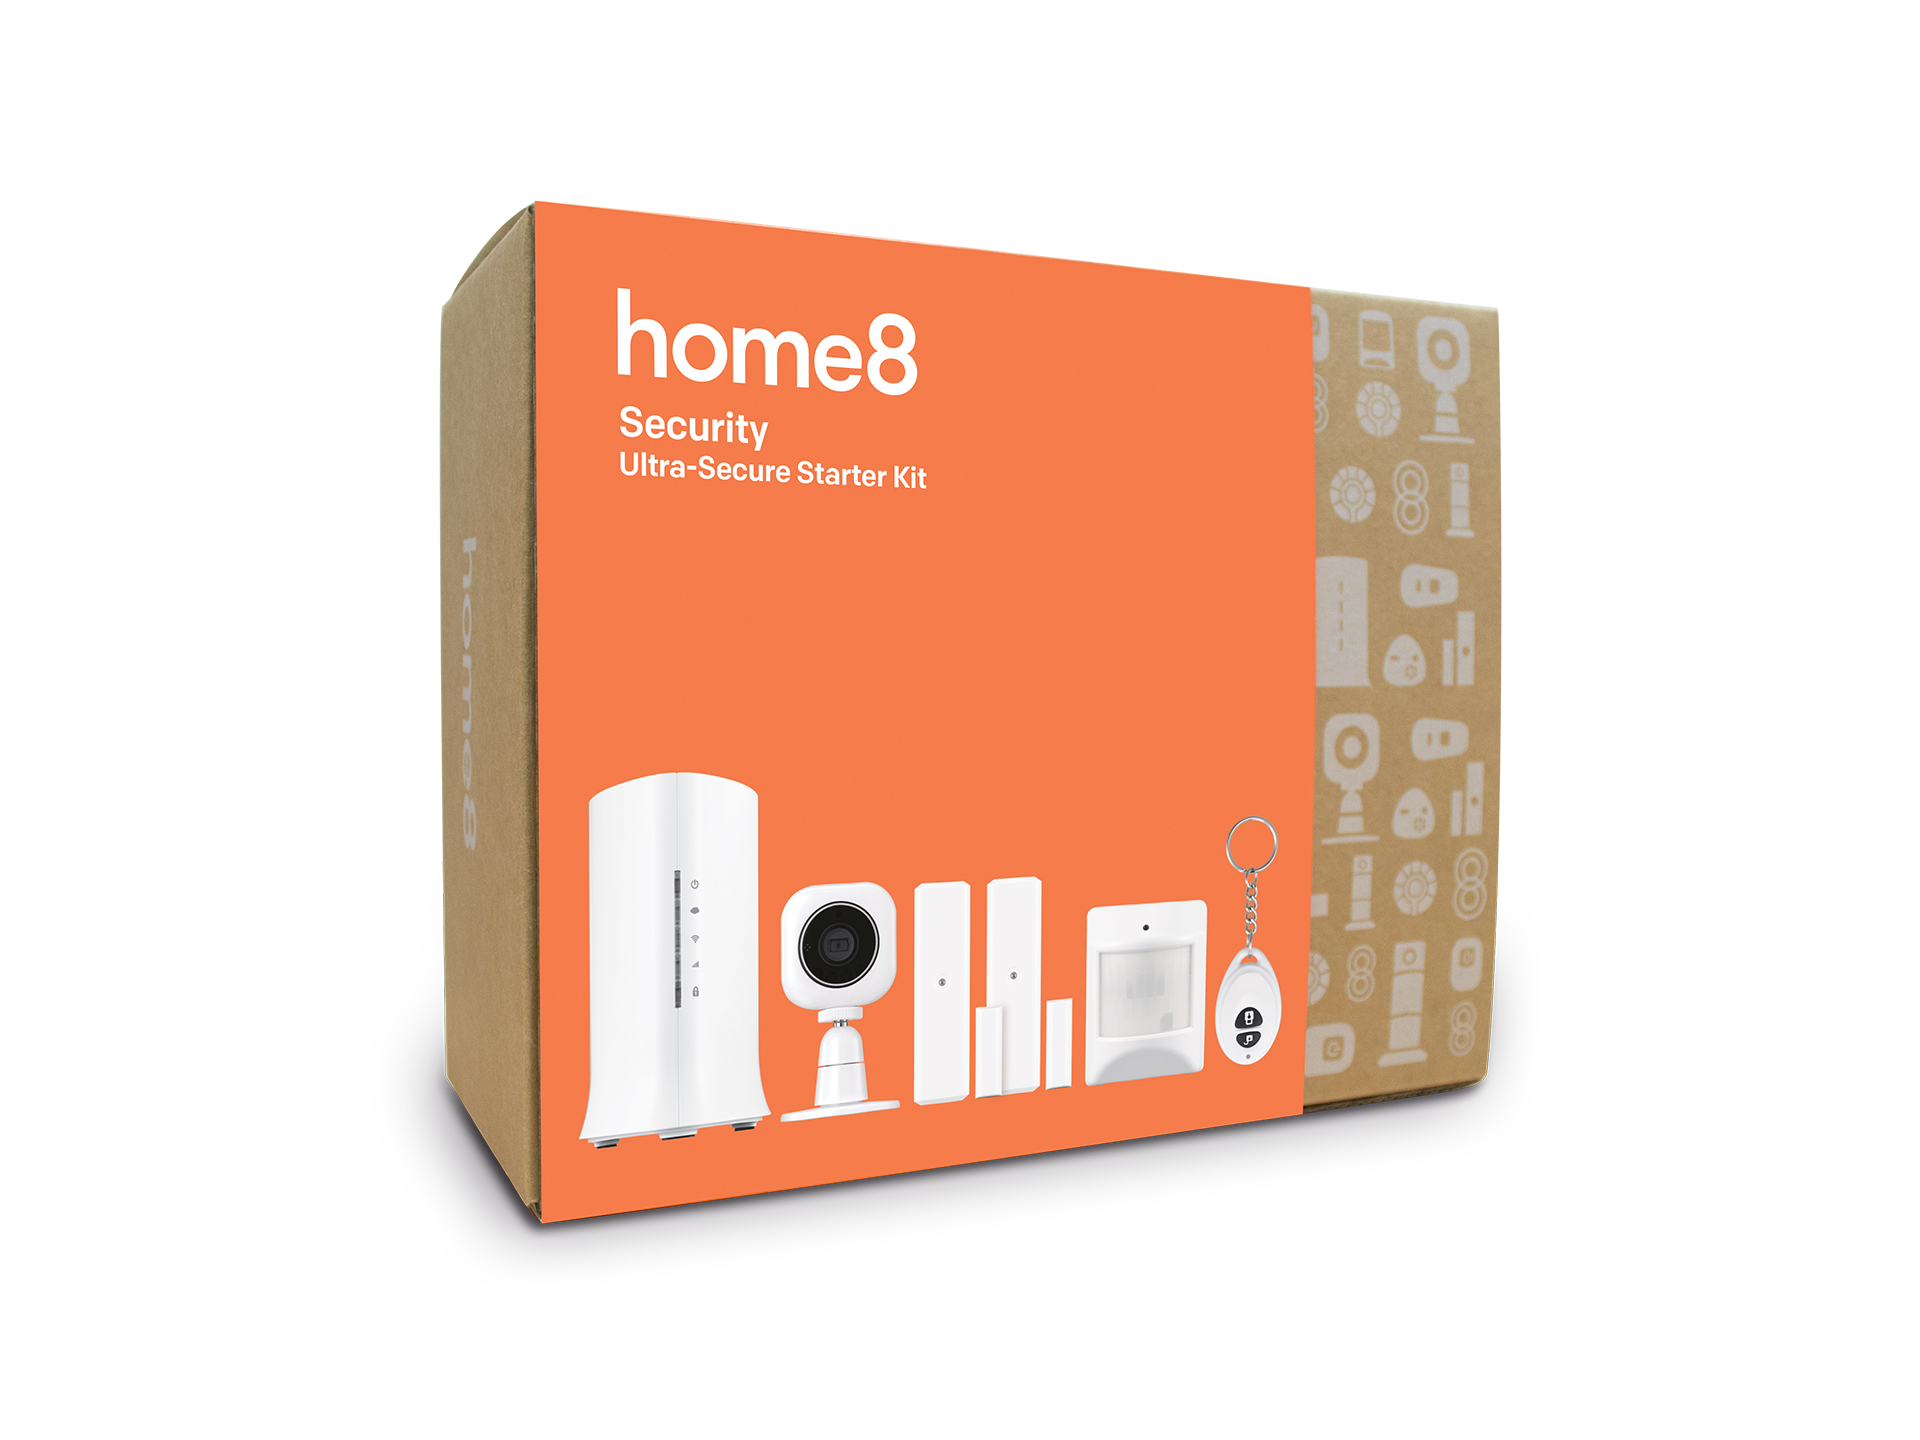 Home8 Security Starter Kit